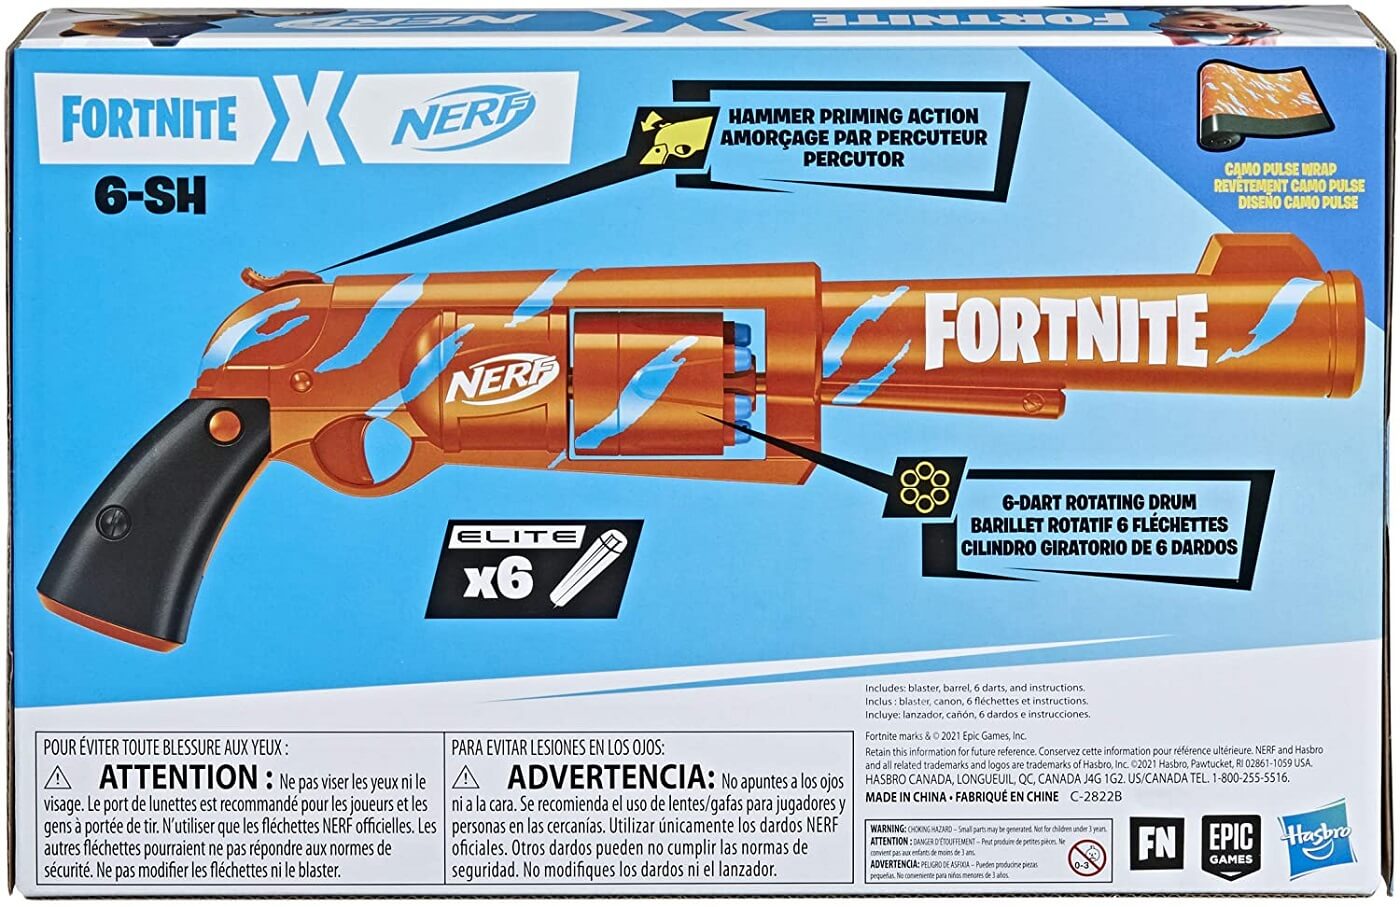 Nerf Fornite 6-SH ( Hasbro F2678 ) imagen e